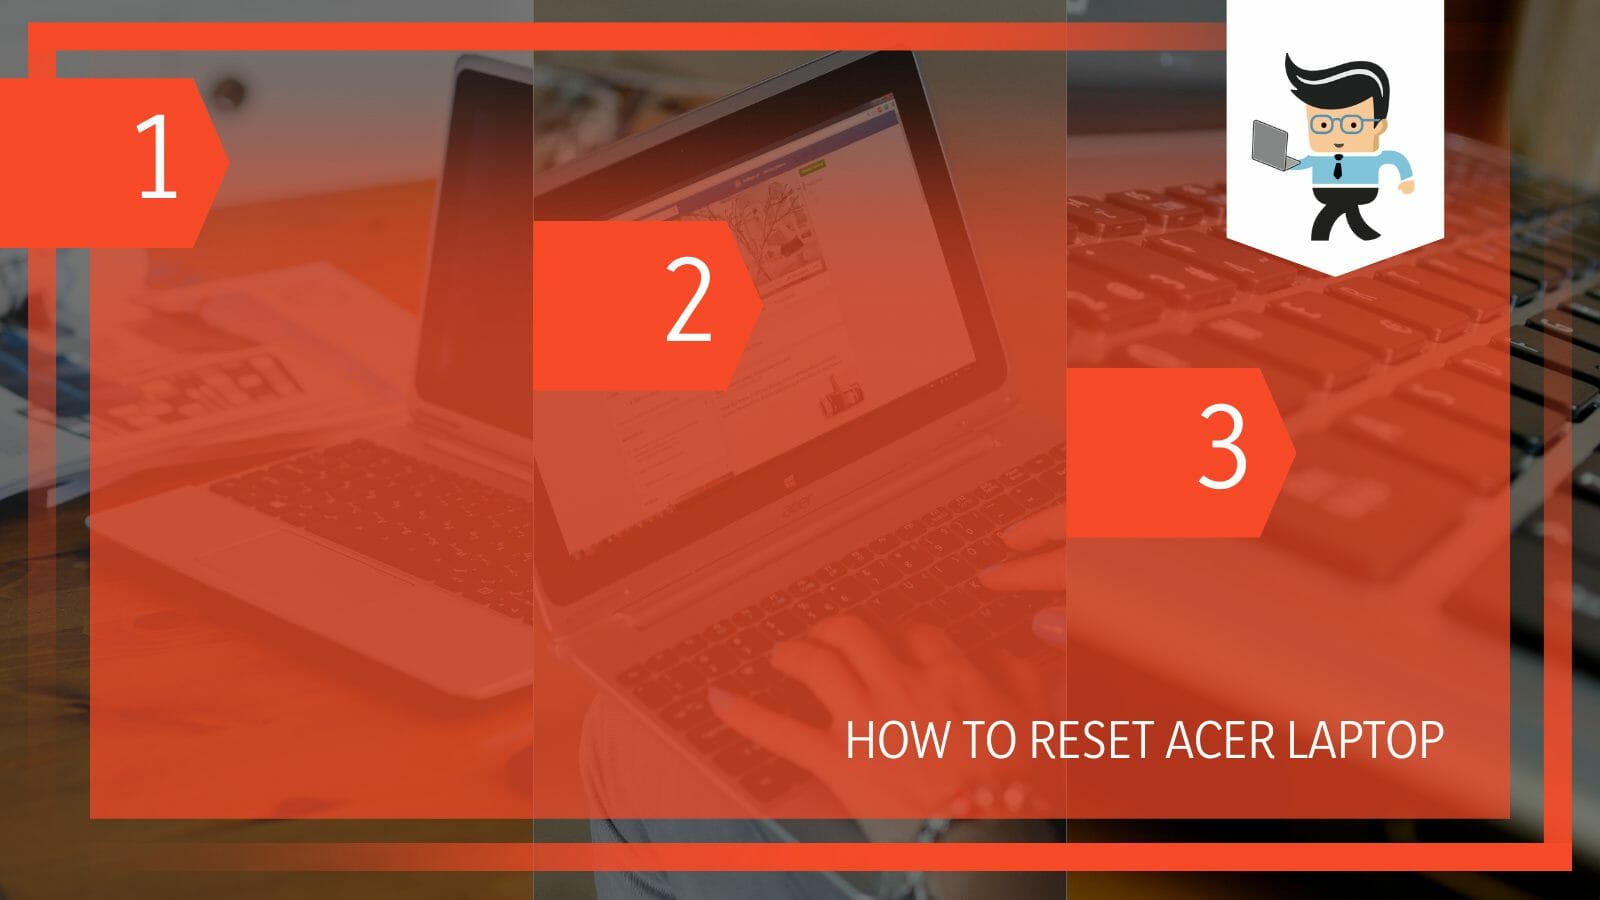 Reset Acer Laptop Like a Pro